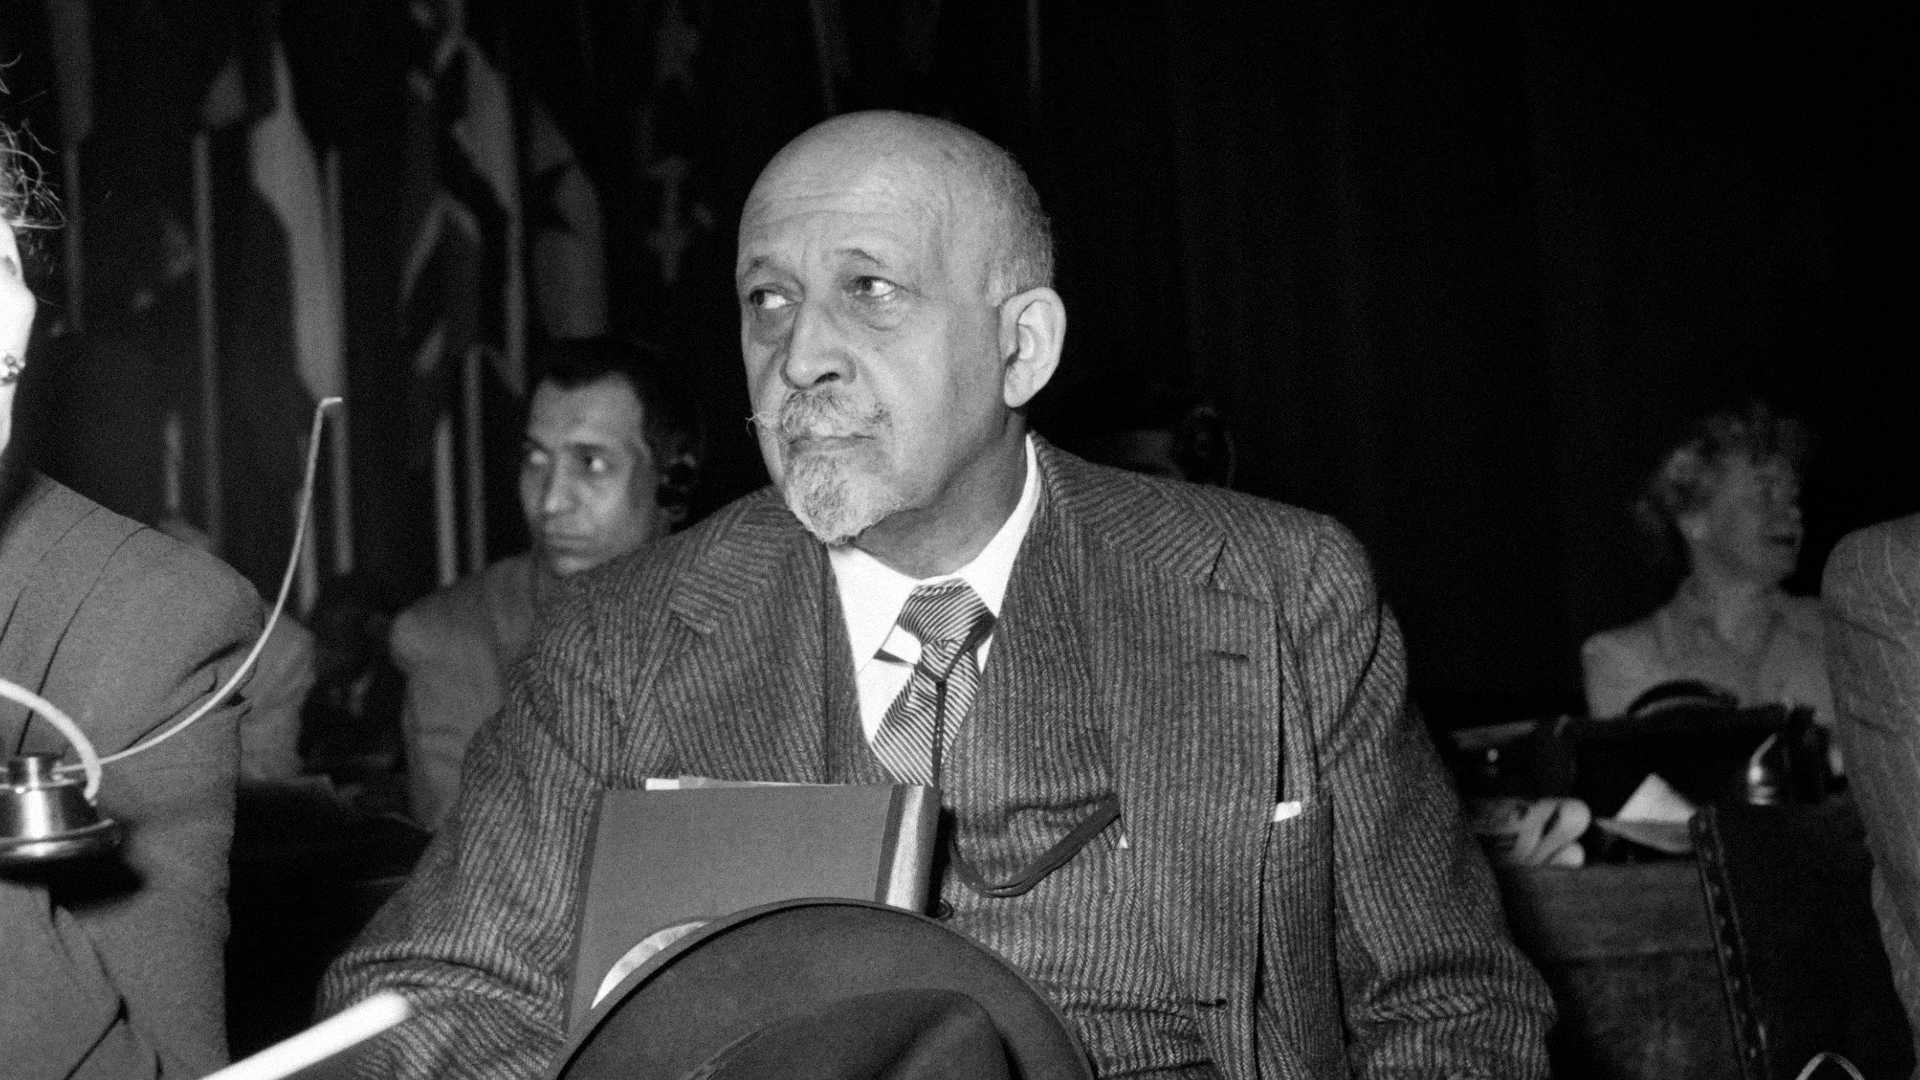 Undated photo shows William Edward Burghardt "W. E. B." Du Bois, US sociologist, historian, civil rights activist, Pan-Africanist, author, writer and editor.